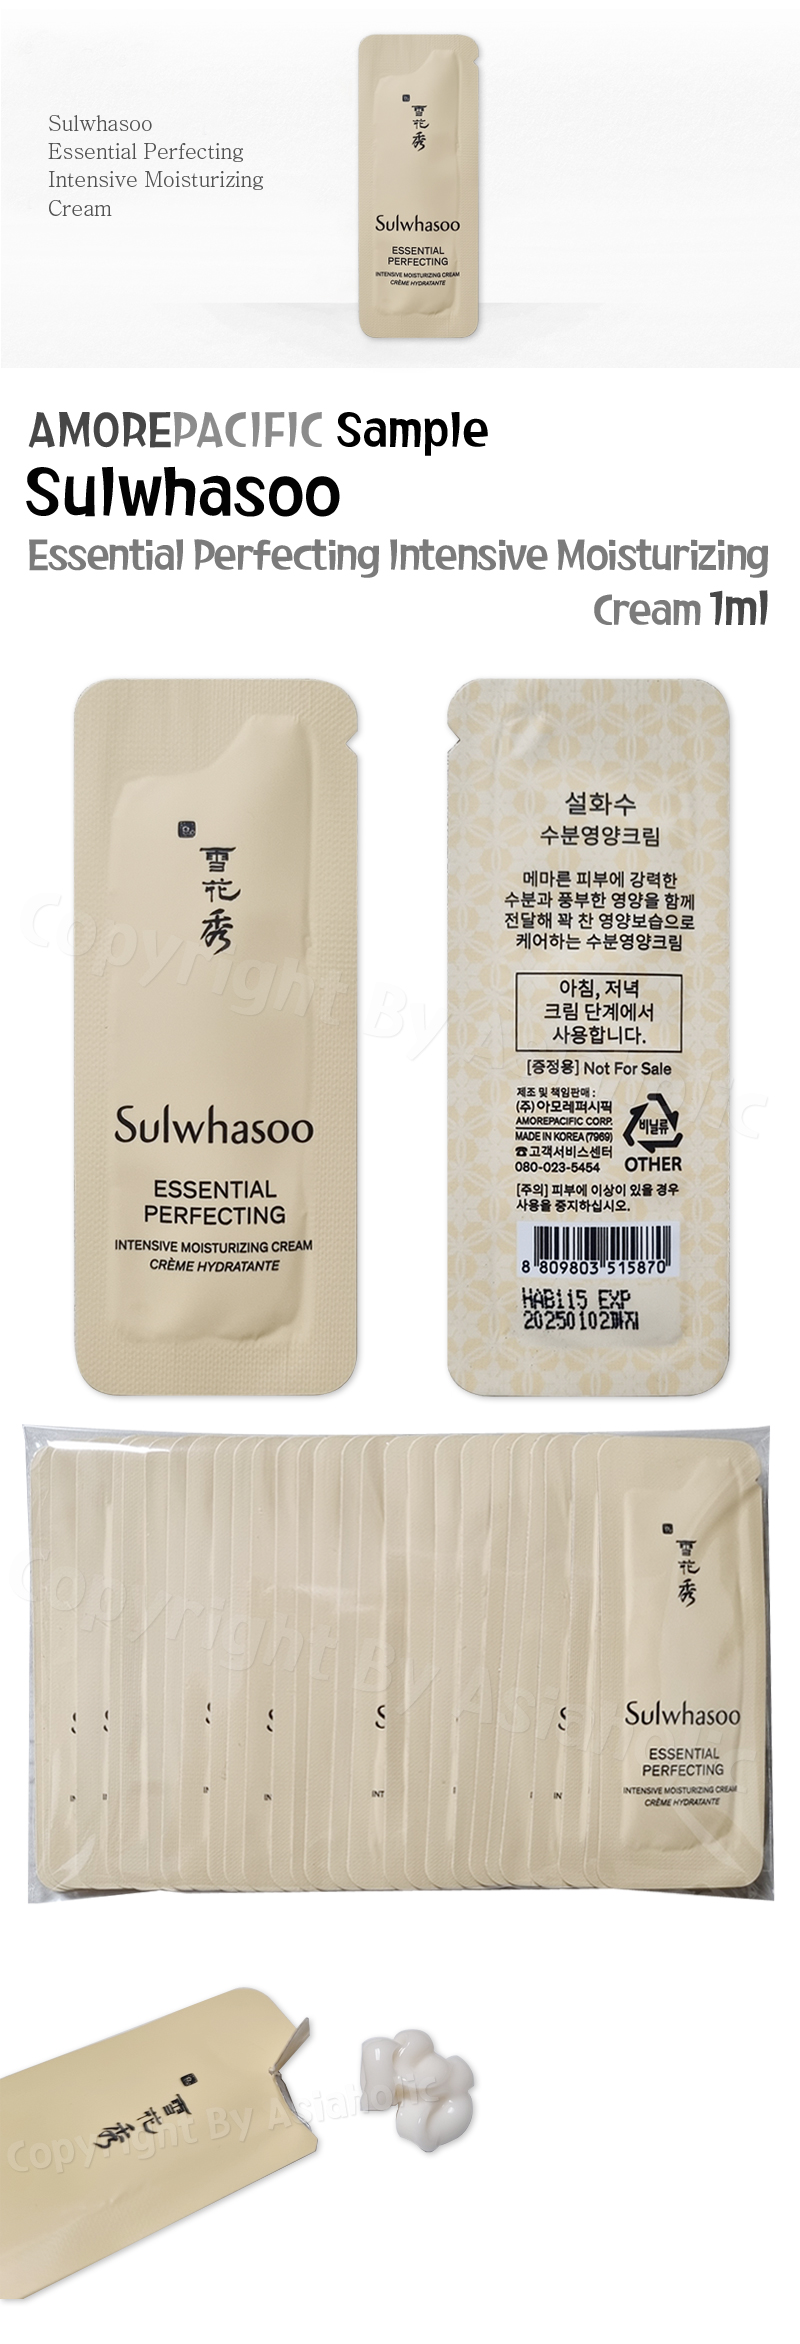 Sulwhasoo Essential Perfecting Intensive Moisturizing Cream 1ml x 30pcs (30ml) Sample Newest Version